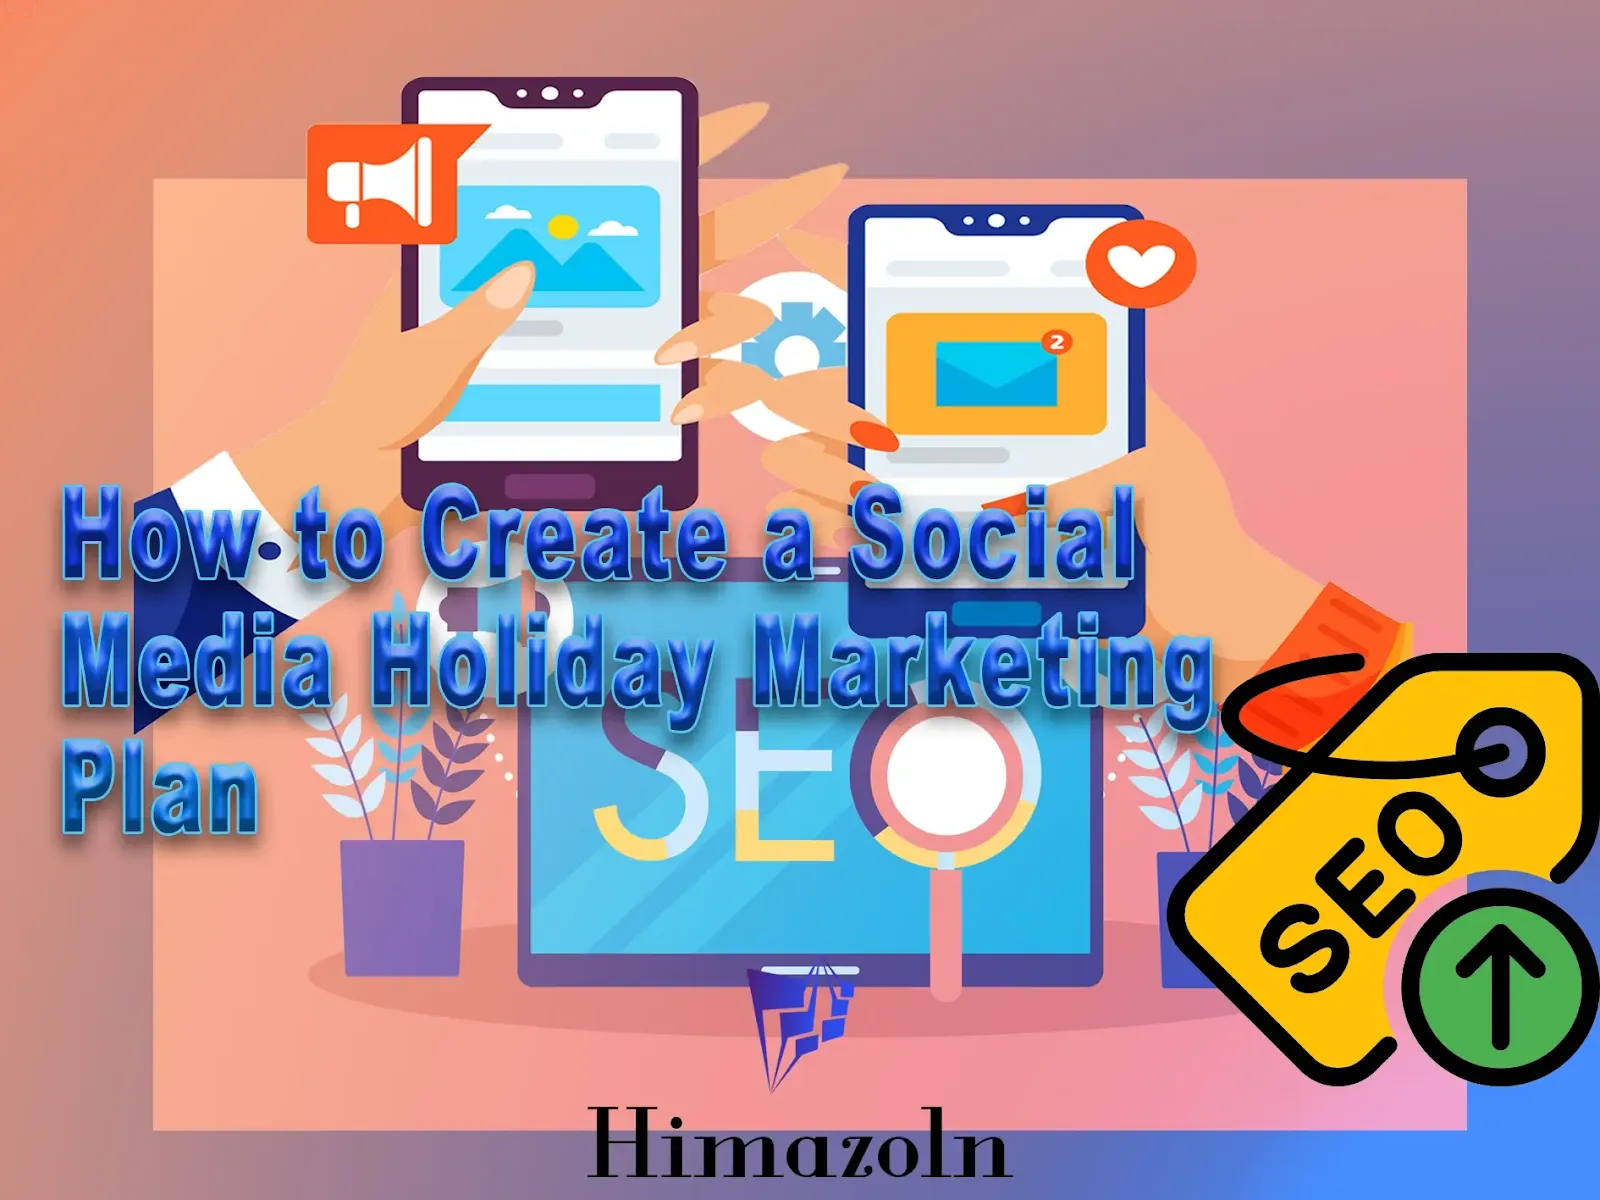 Seo - How to Create a Social Media Holiday Marketing Plan